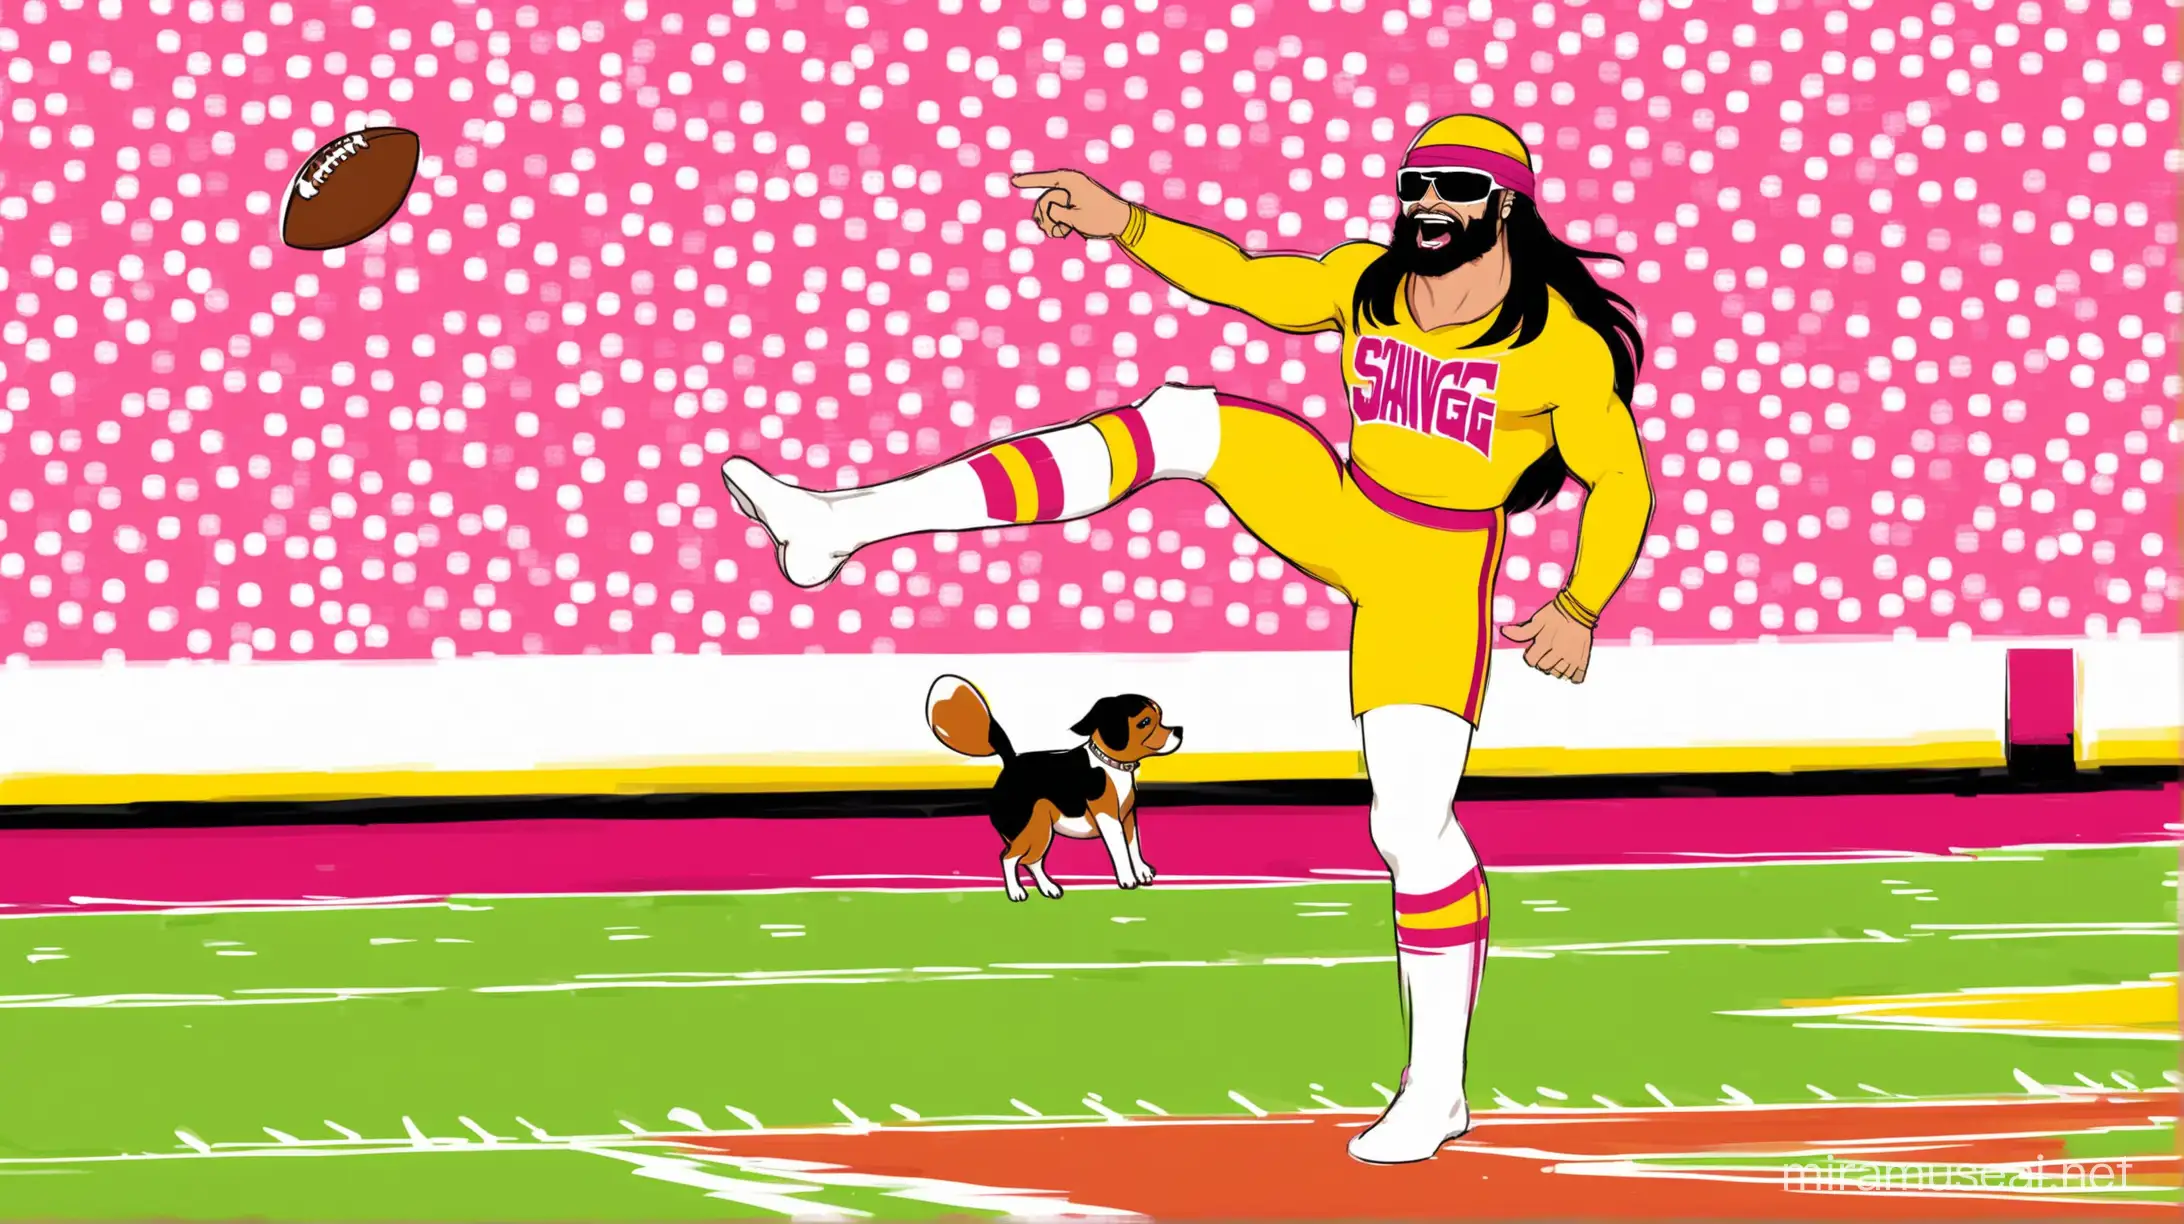 Macho Man Randy Savage, kicking a small dog into the field goal of a football field